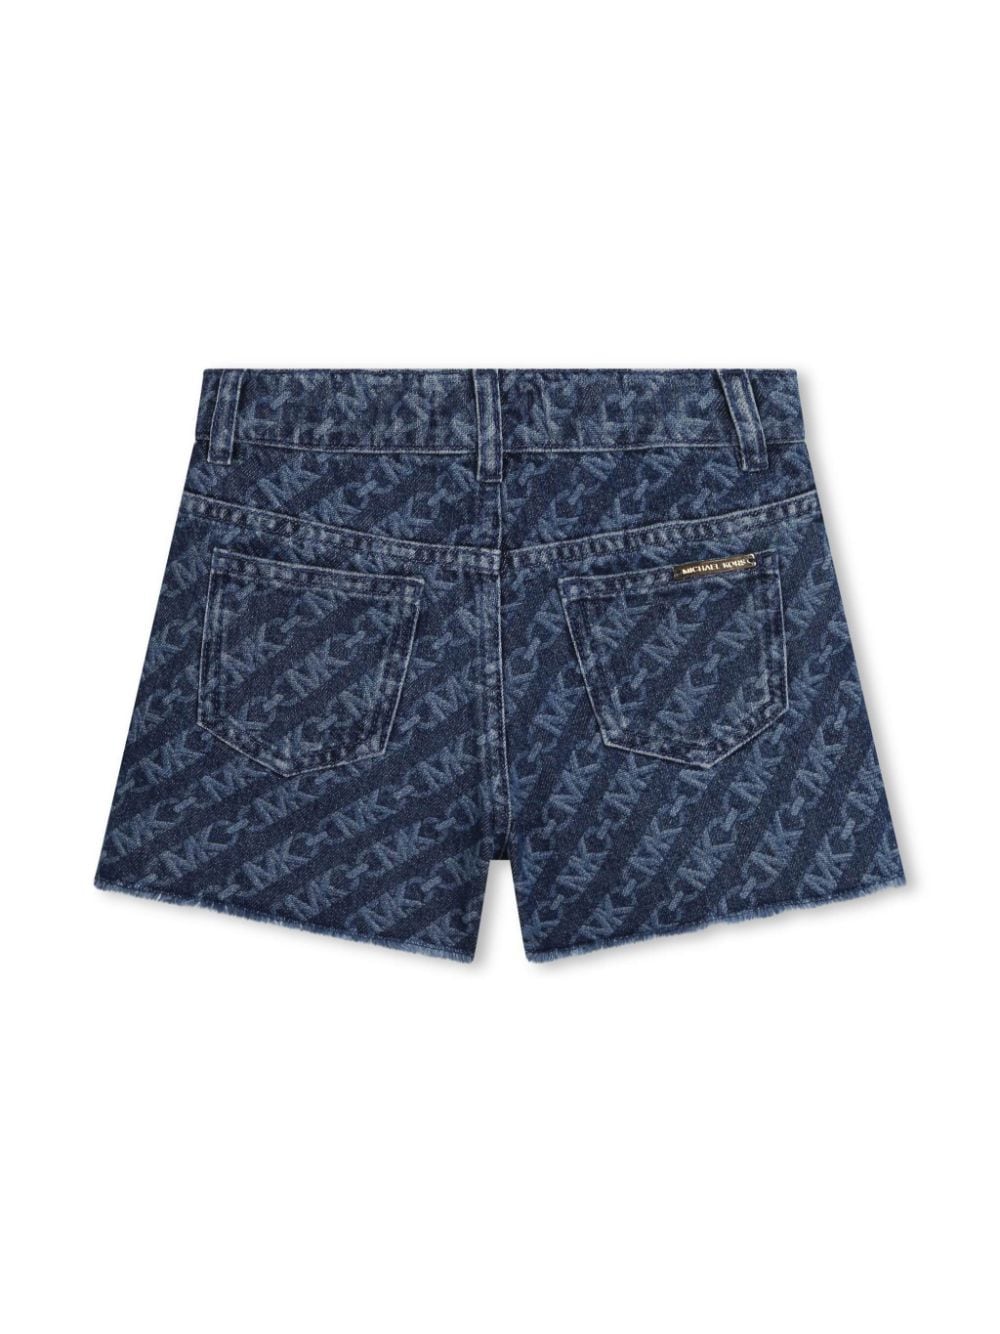 Blue denim Bermuda shorts for girls